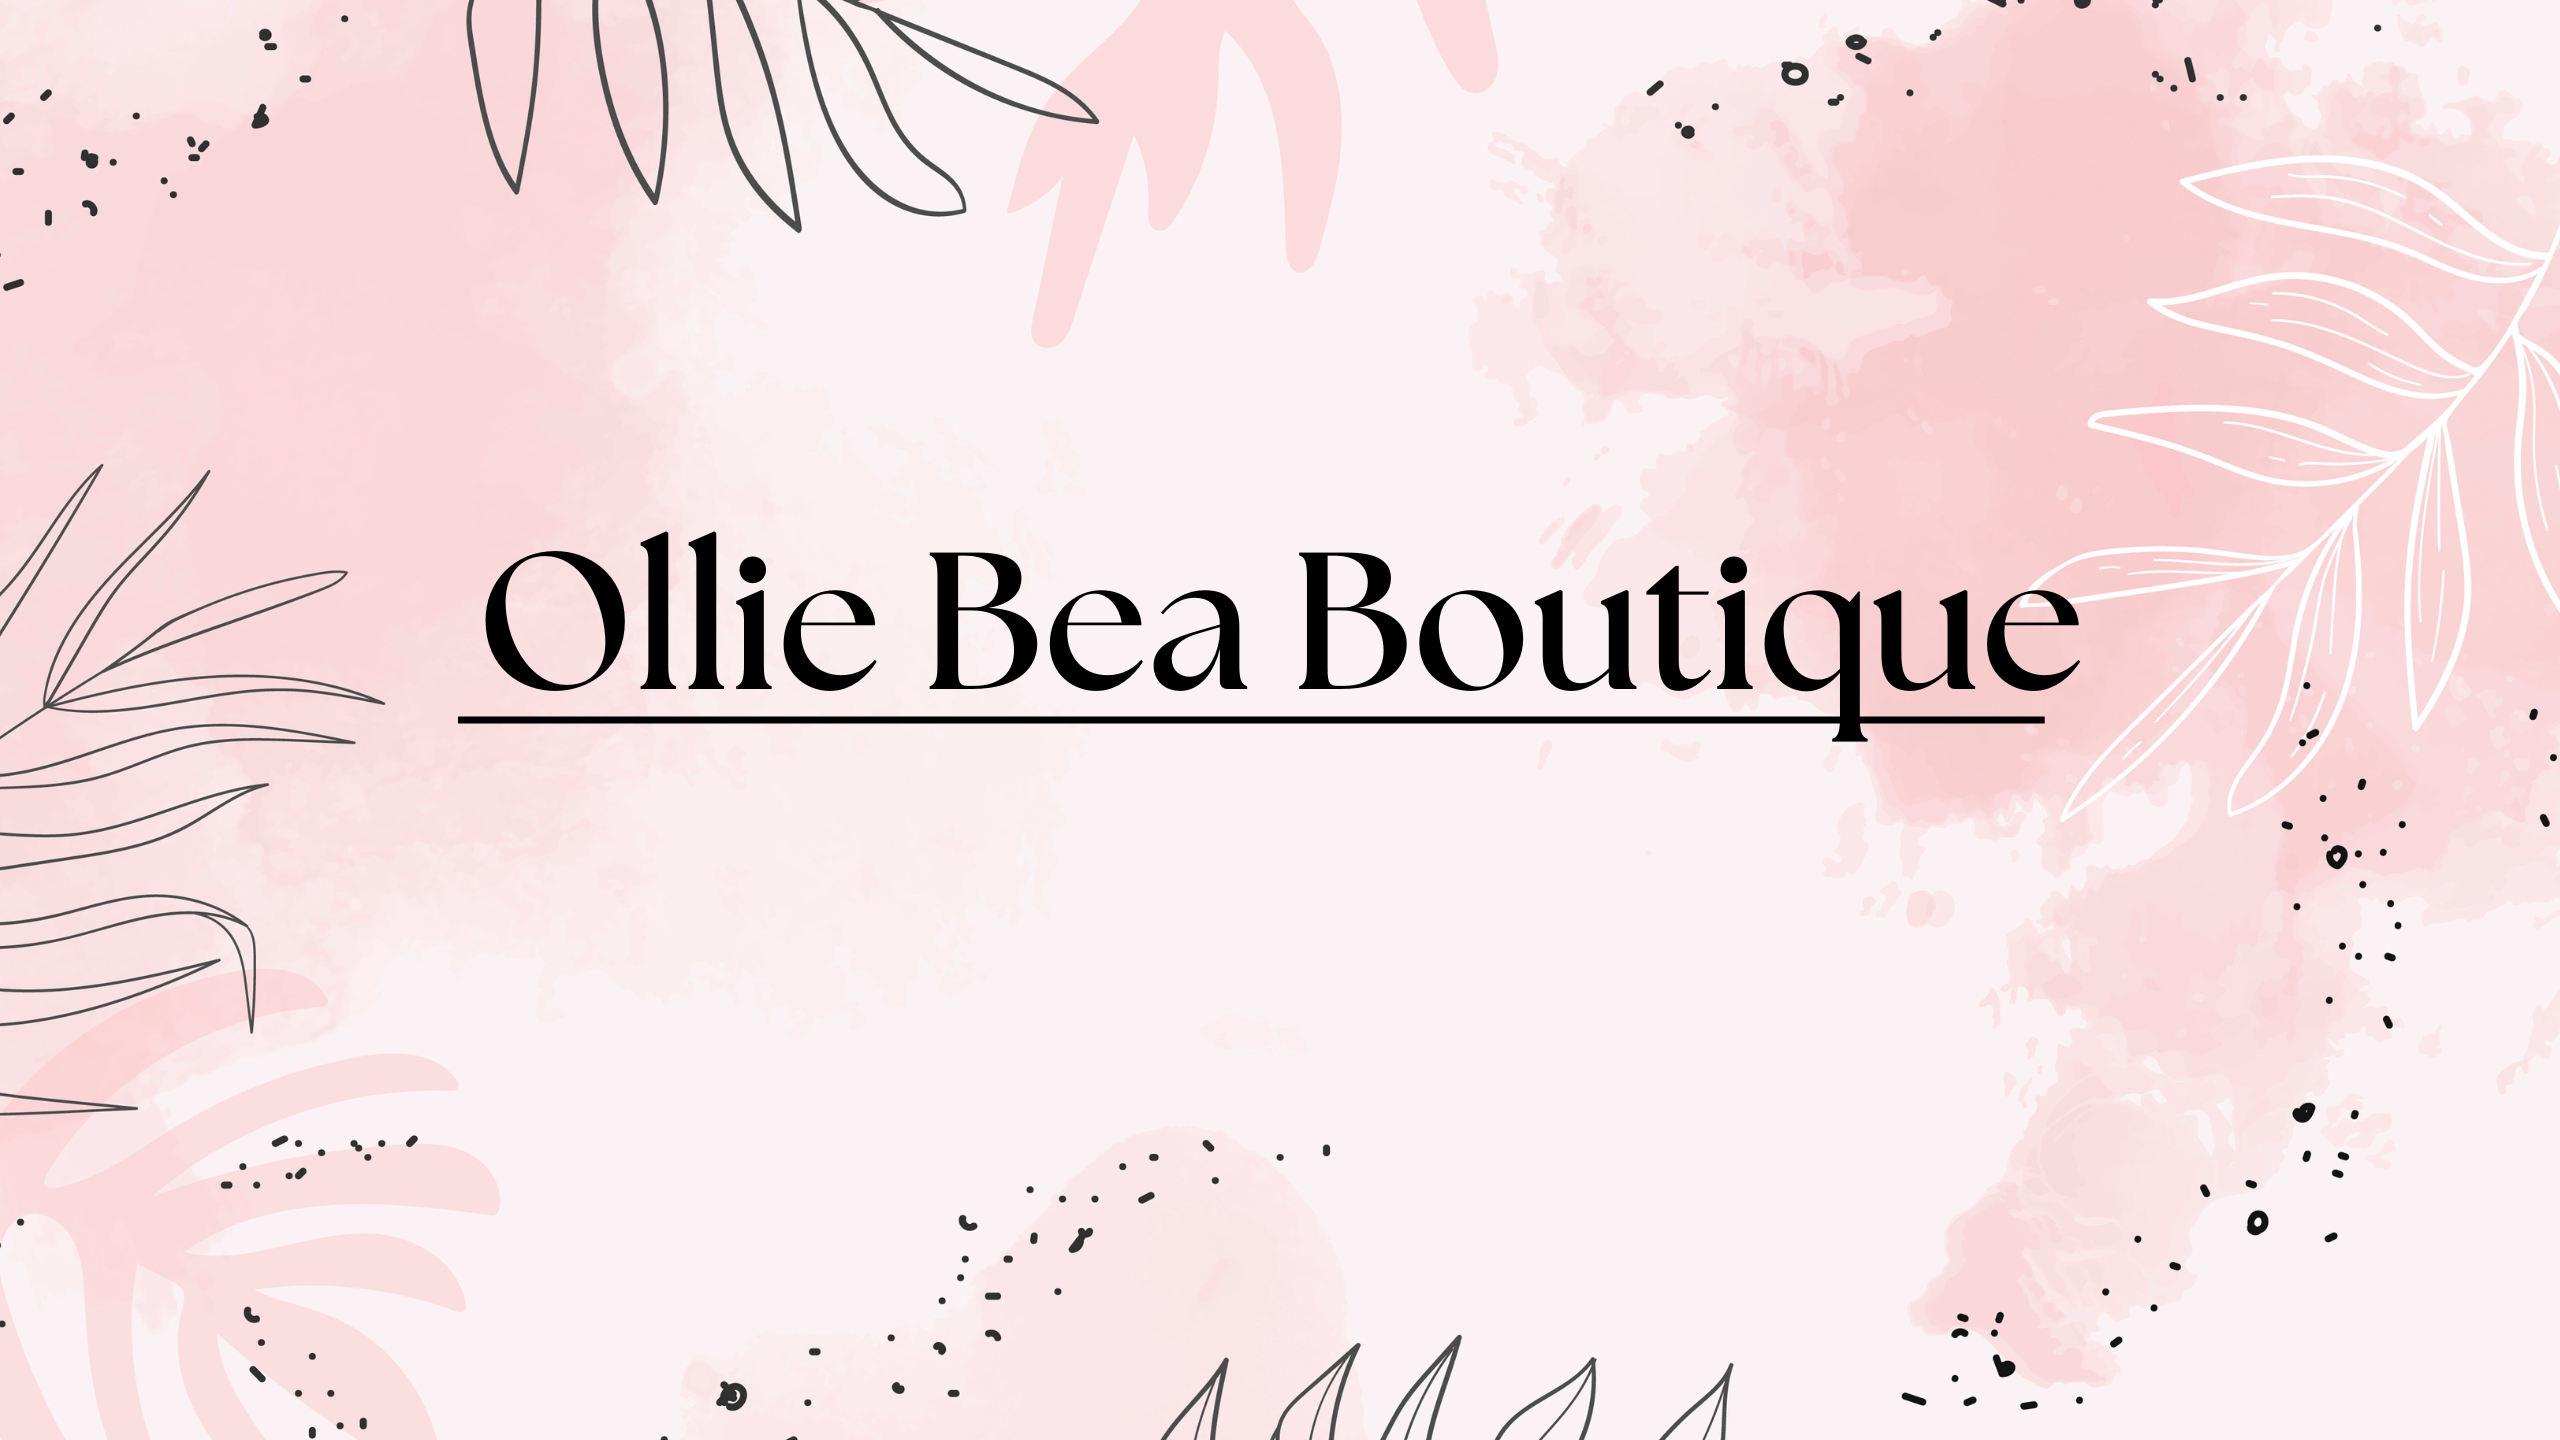 Ollie Bea Boutique